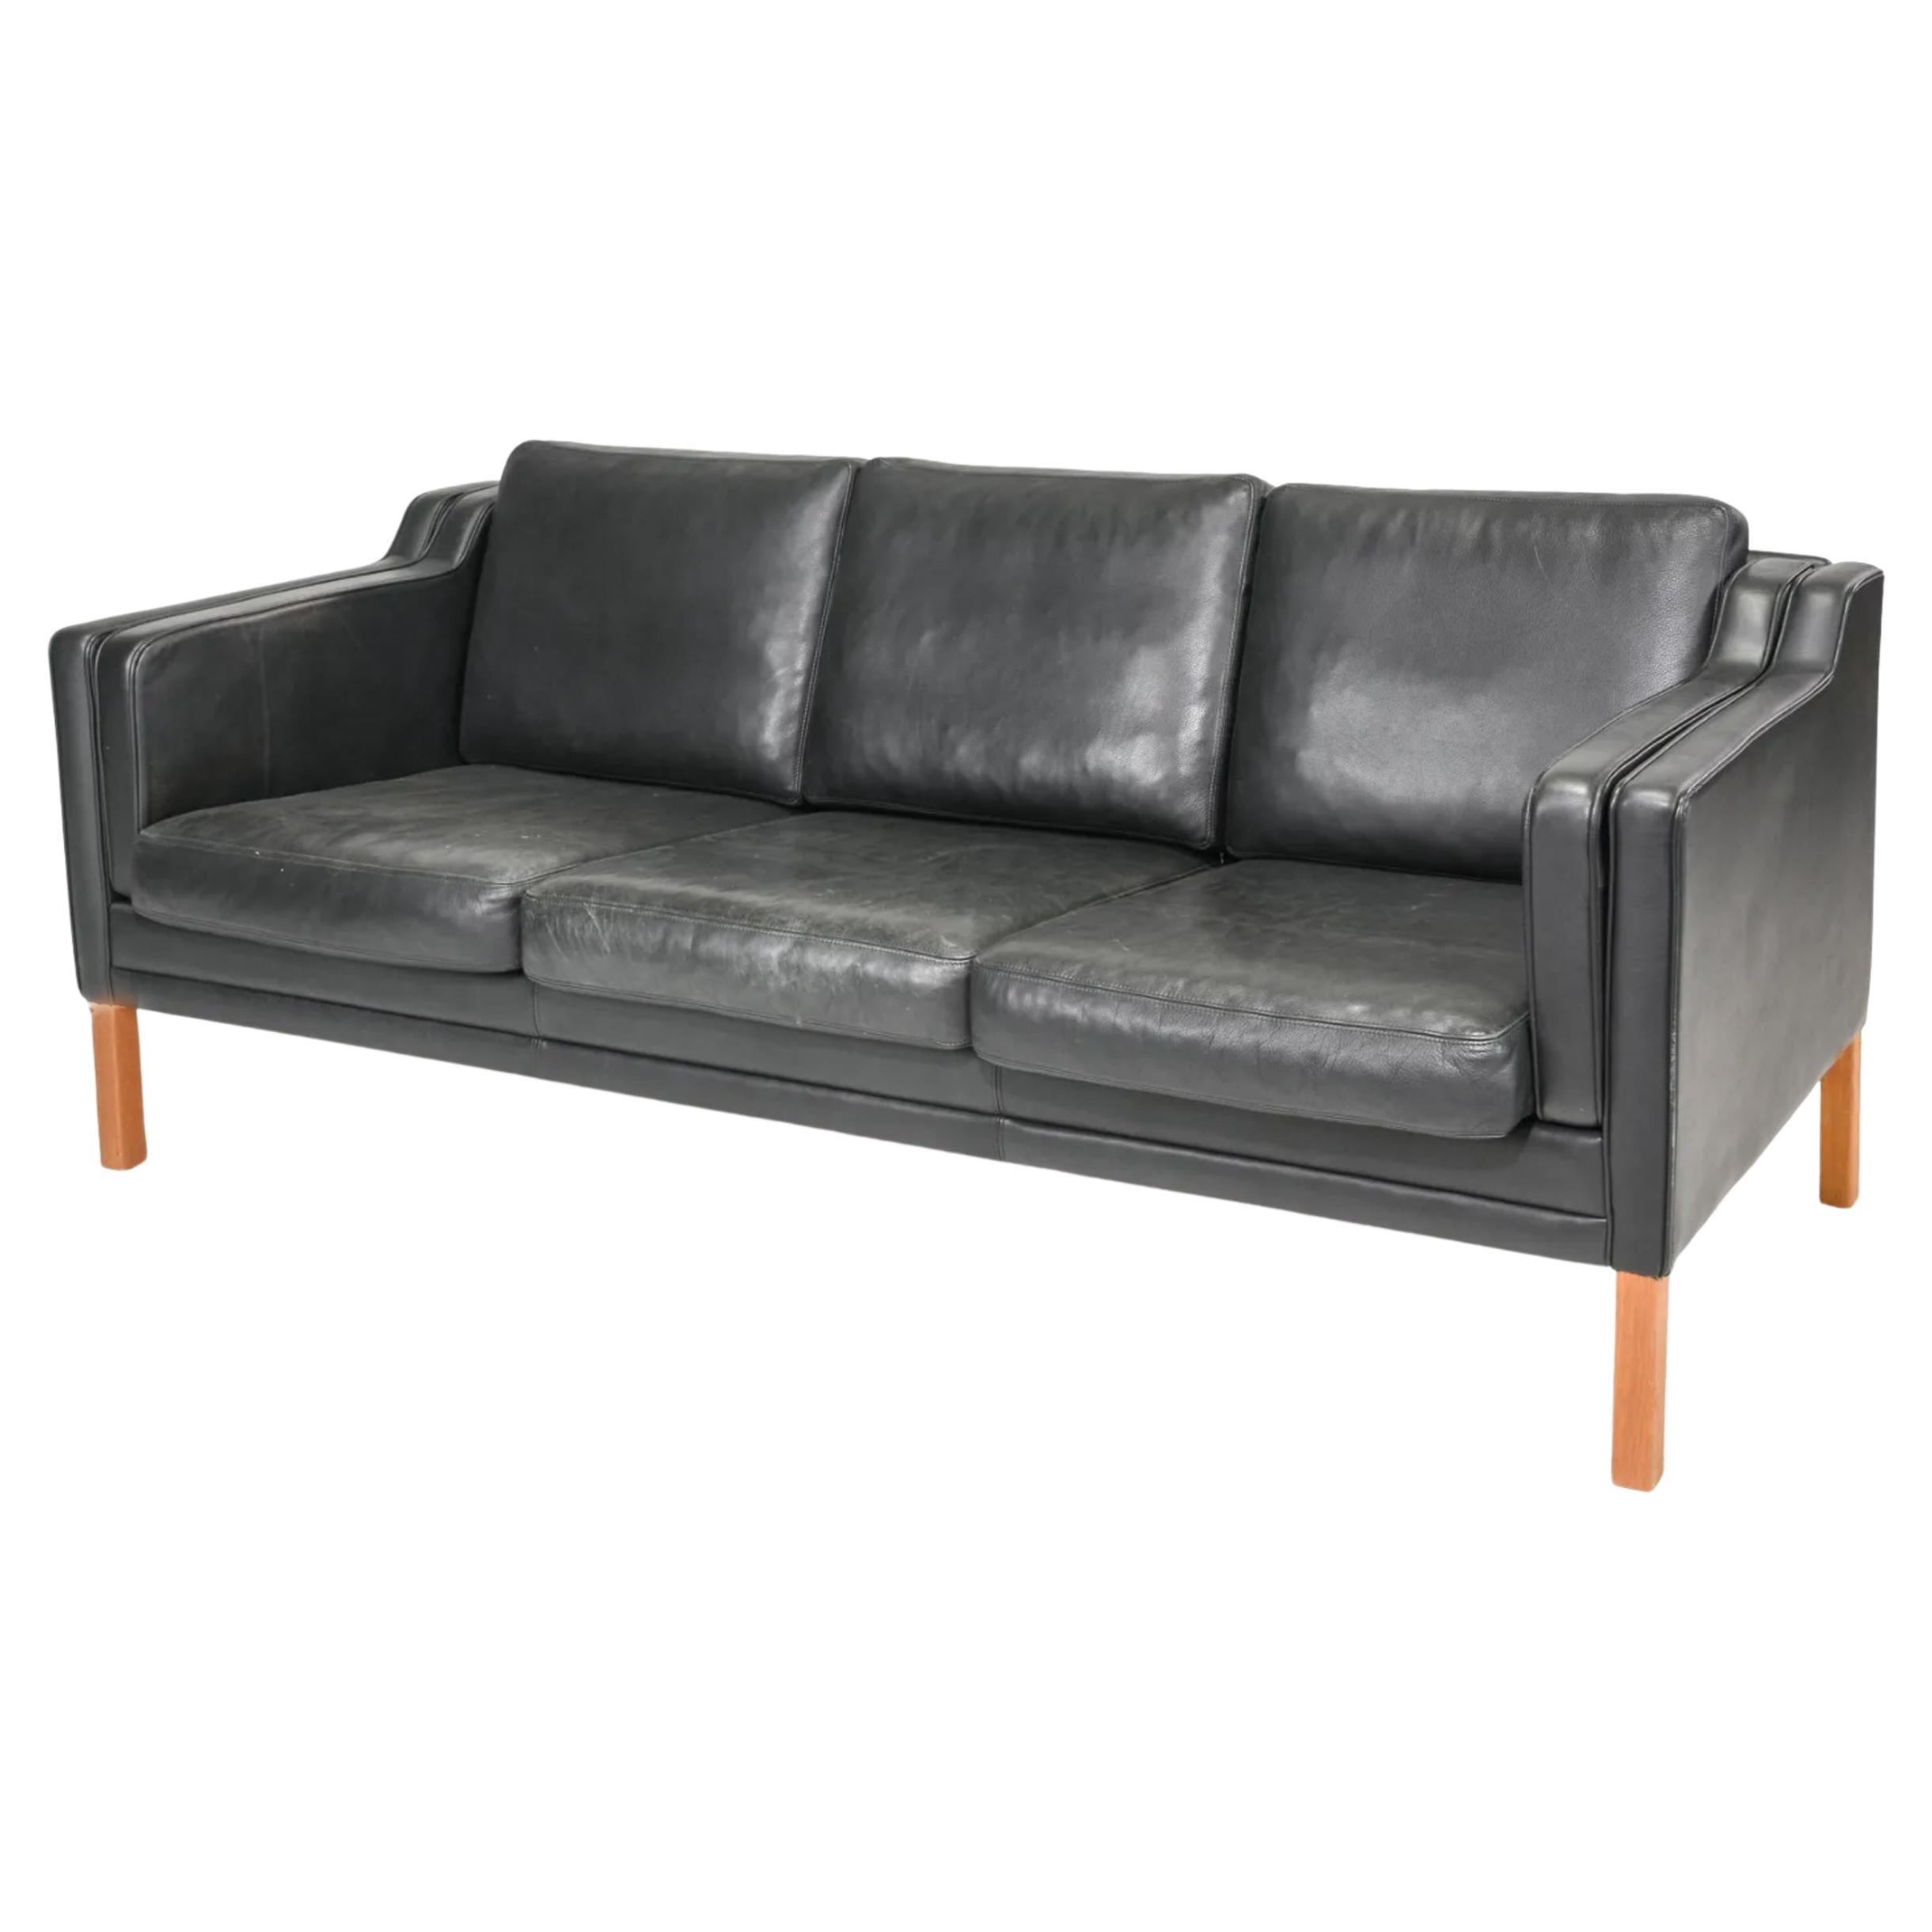 Great Midcentury Danish Modern Beautiful Black Leather 3 Seat Sofa Wood Legs